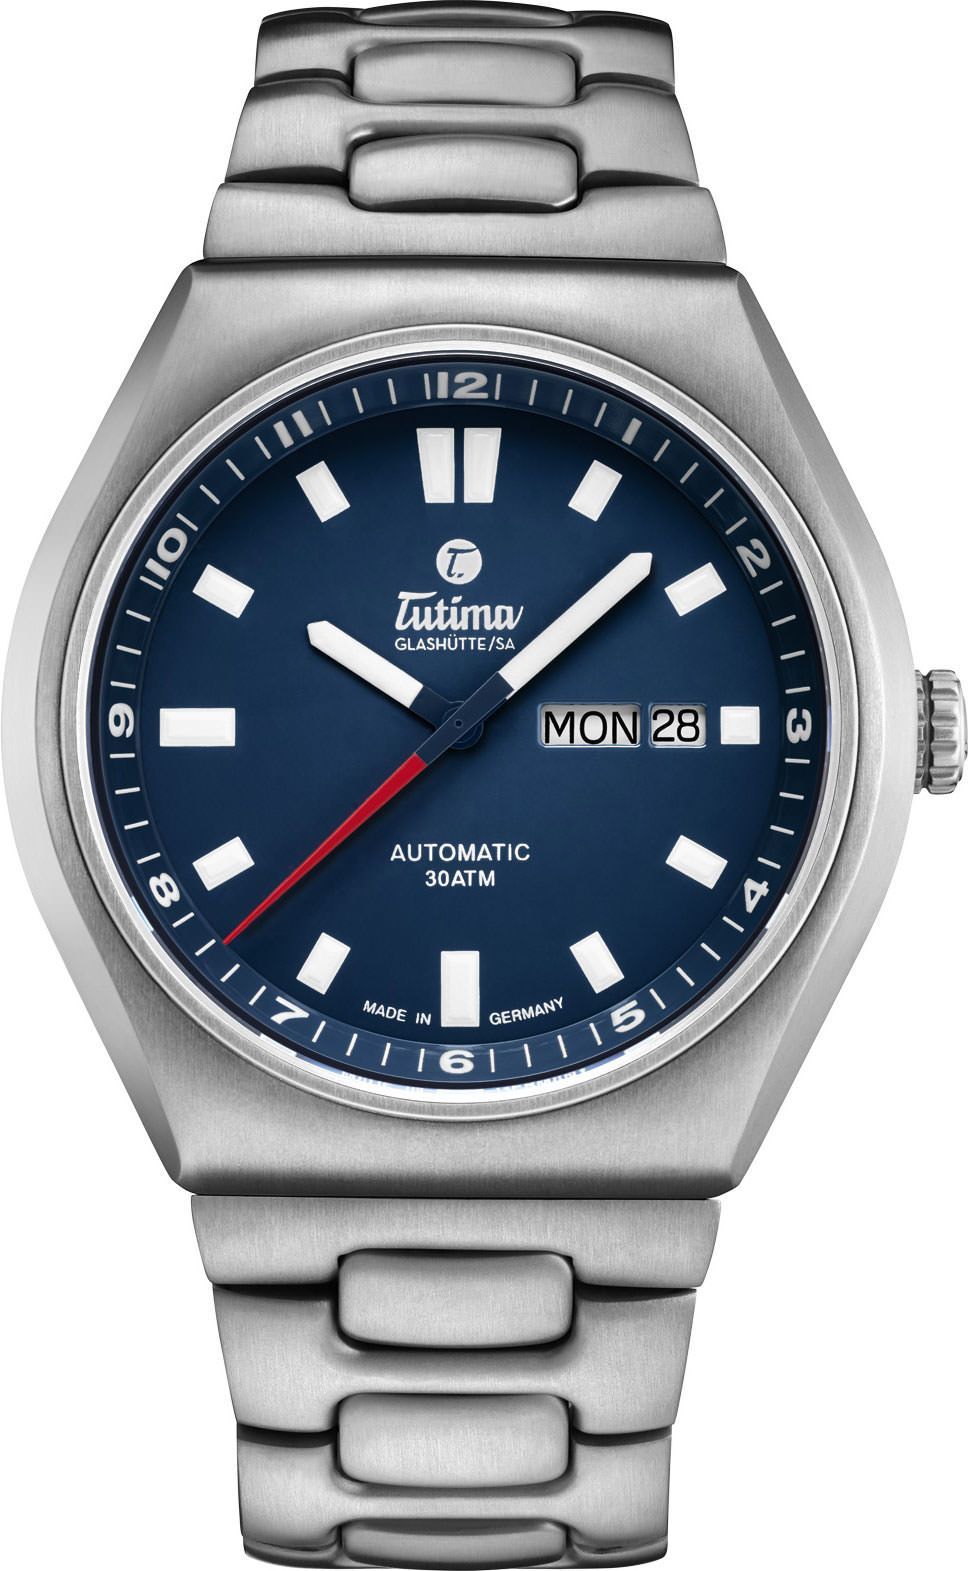 Tutima Glashütte Coastline 43 mm Watch in Blue Dial For Men - 1